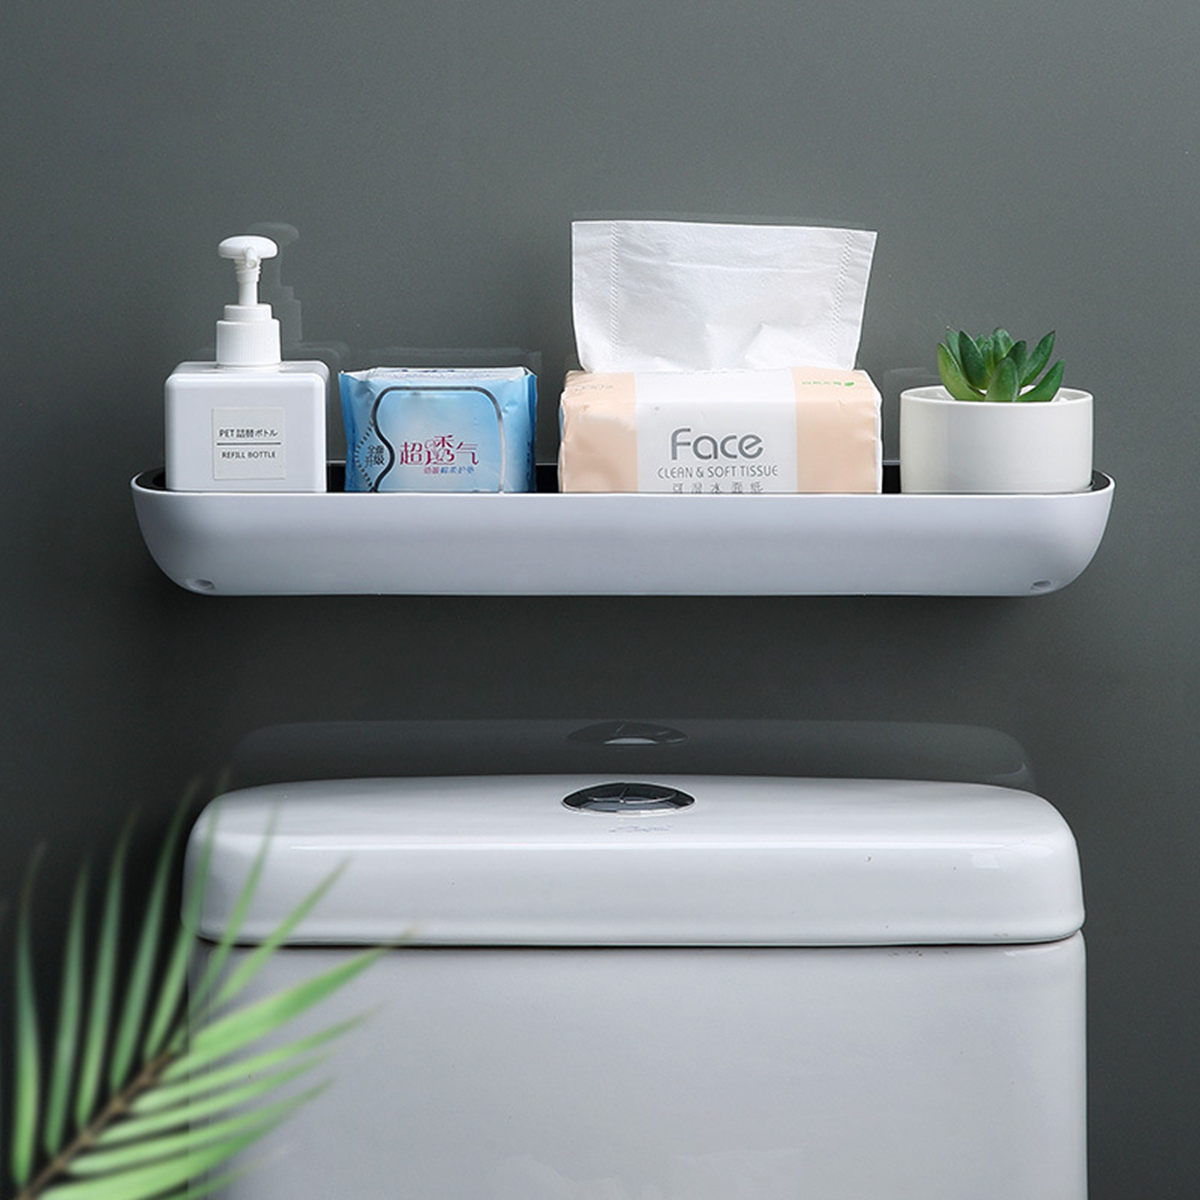 Shampoo Multifunctional Space Saving Bathroom Kitchen Organizer Shower Rack Storage Shelf Jewel Holder